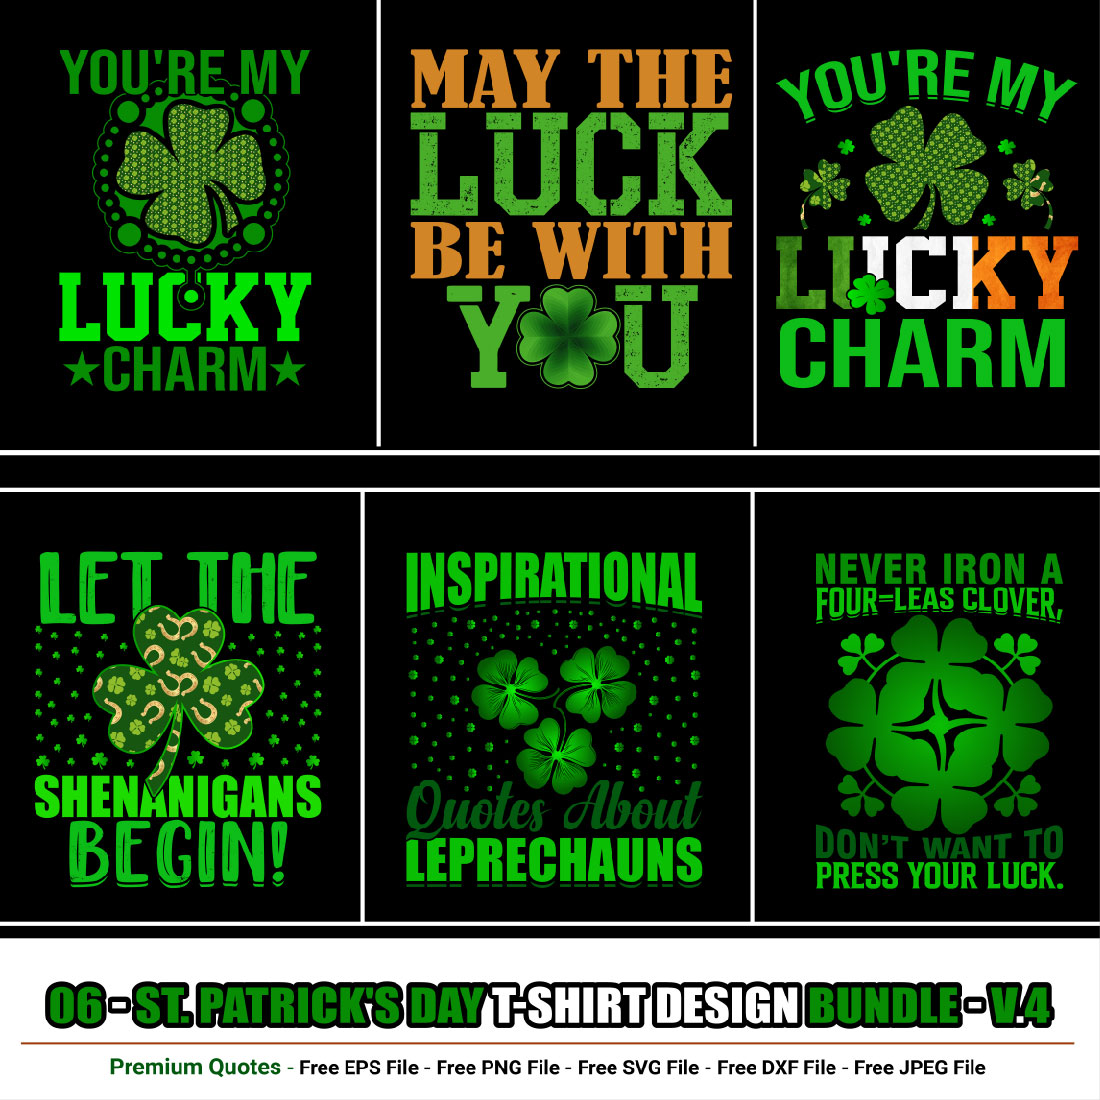 St Patrick’s Day T-shirt Design Bundle preview image.